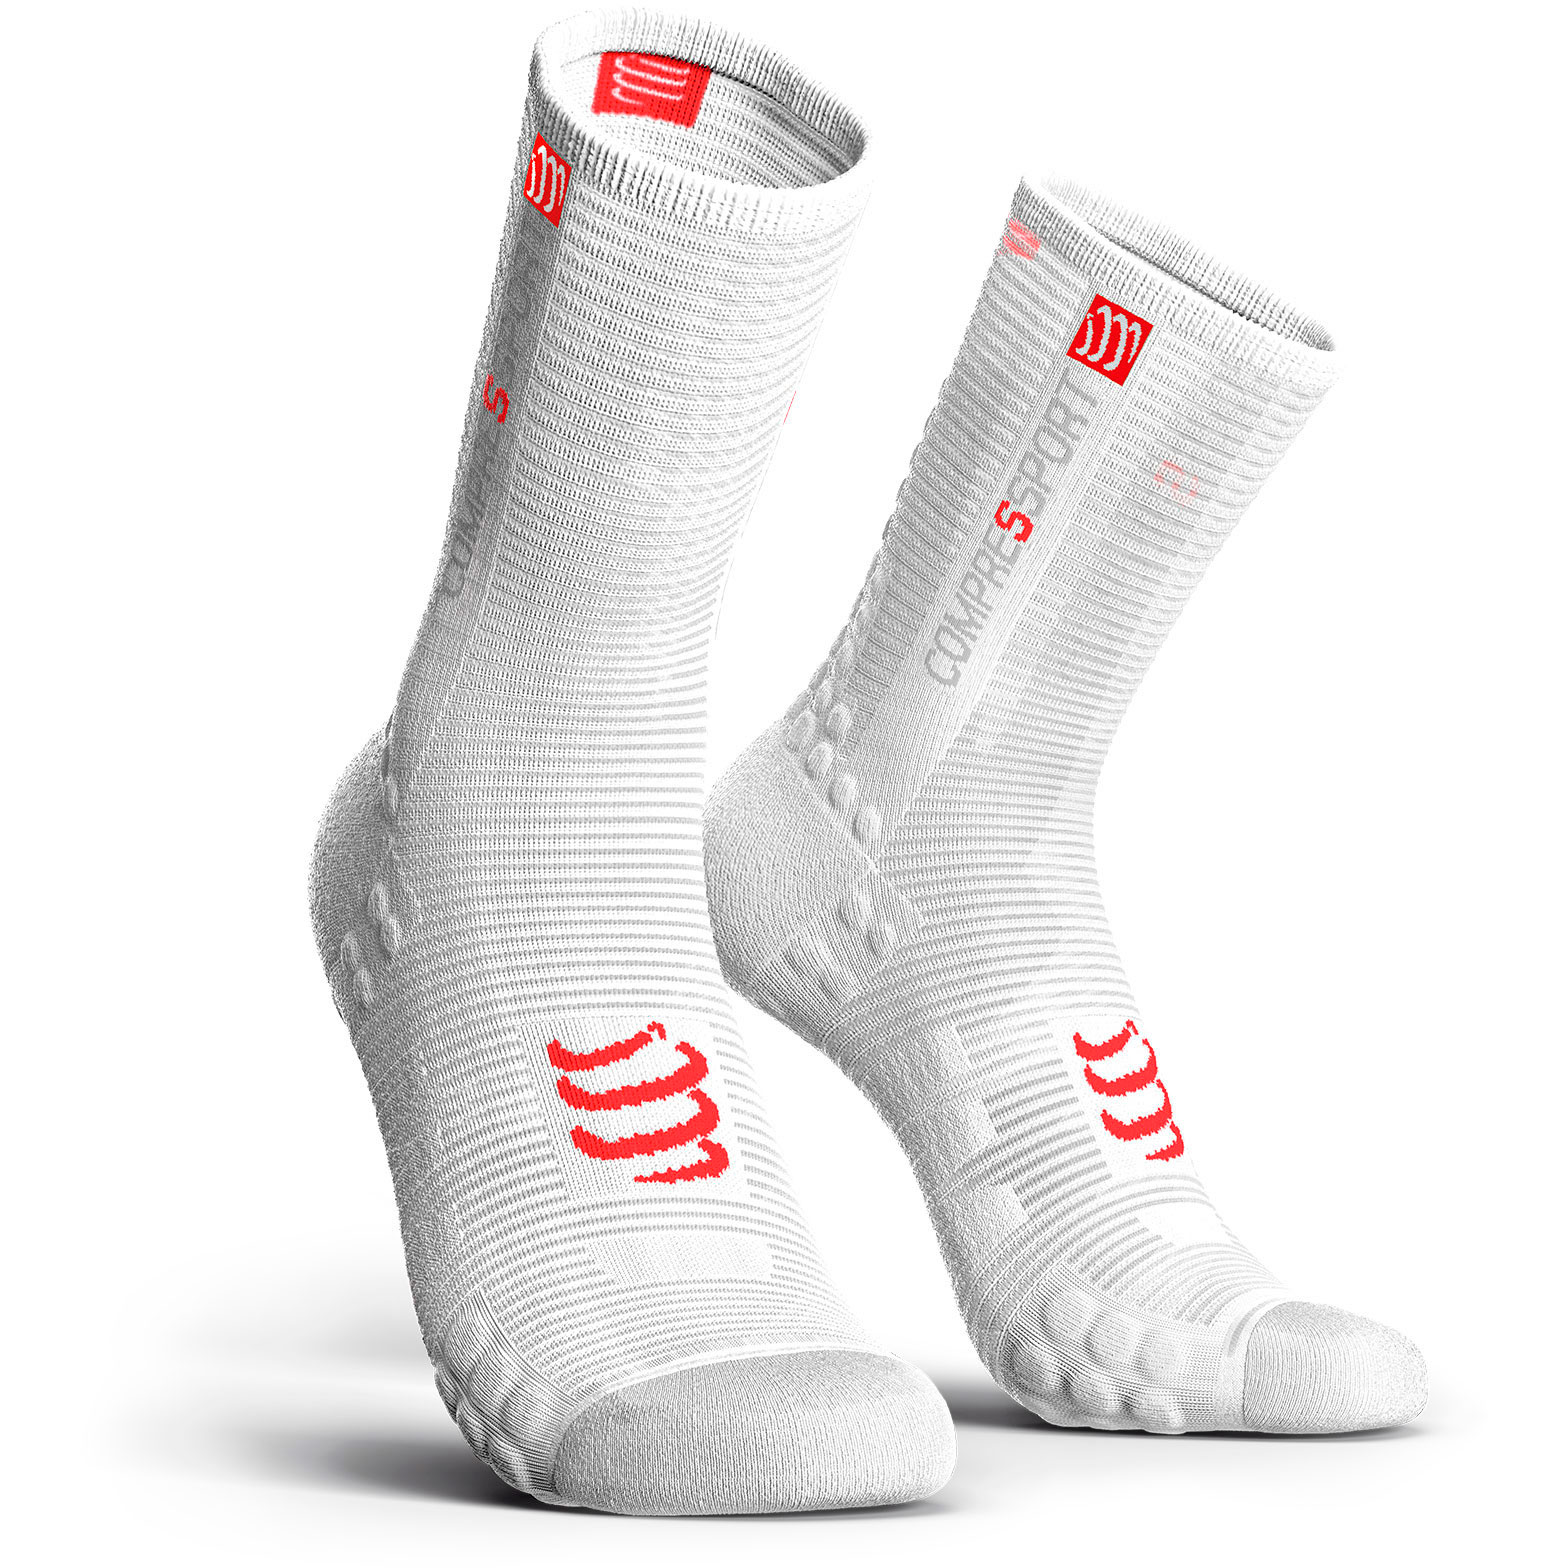 Шкарпетки компресійні Compressport Pro Racing Socks V3.0 Bike, Black/Red